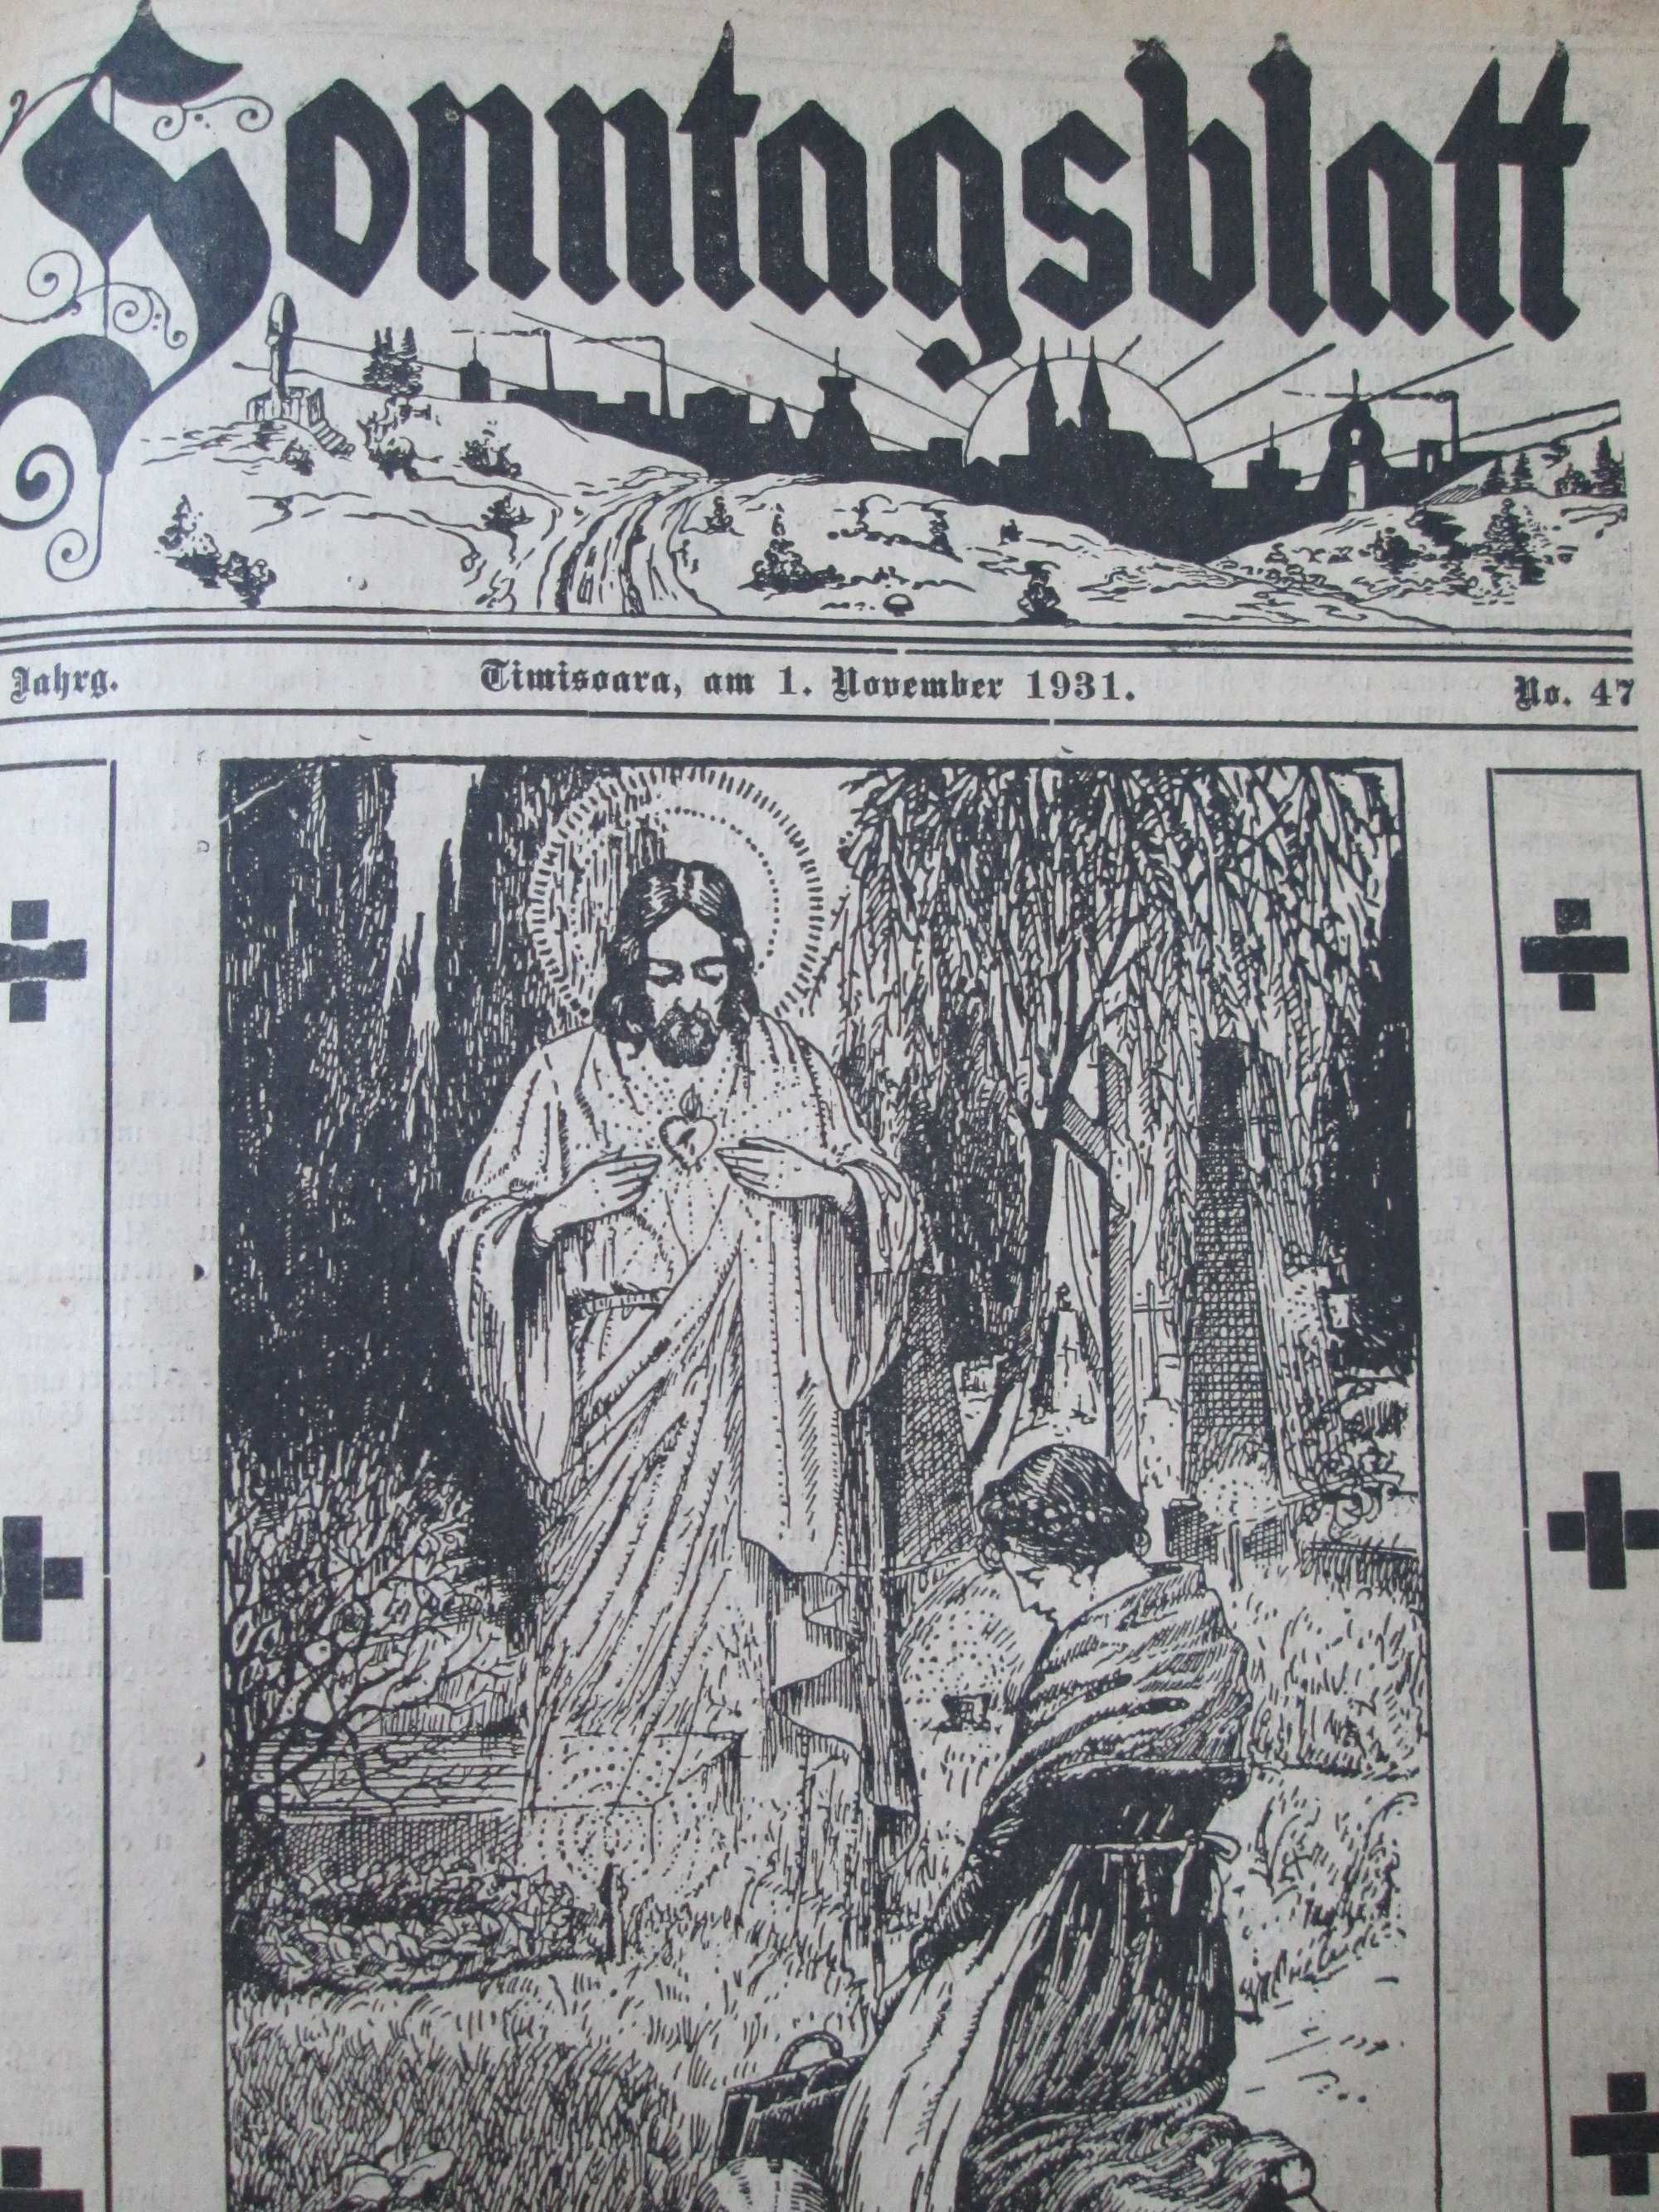 Ziare vechi: Temesvar, Timisoara Sonntagsblatt. Nr. 1-50 din 1930-1931